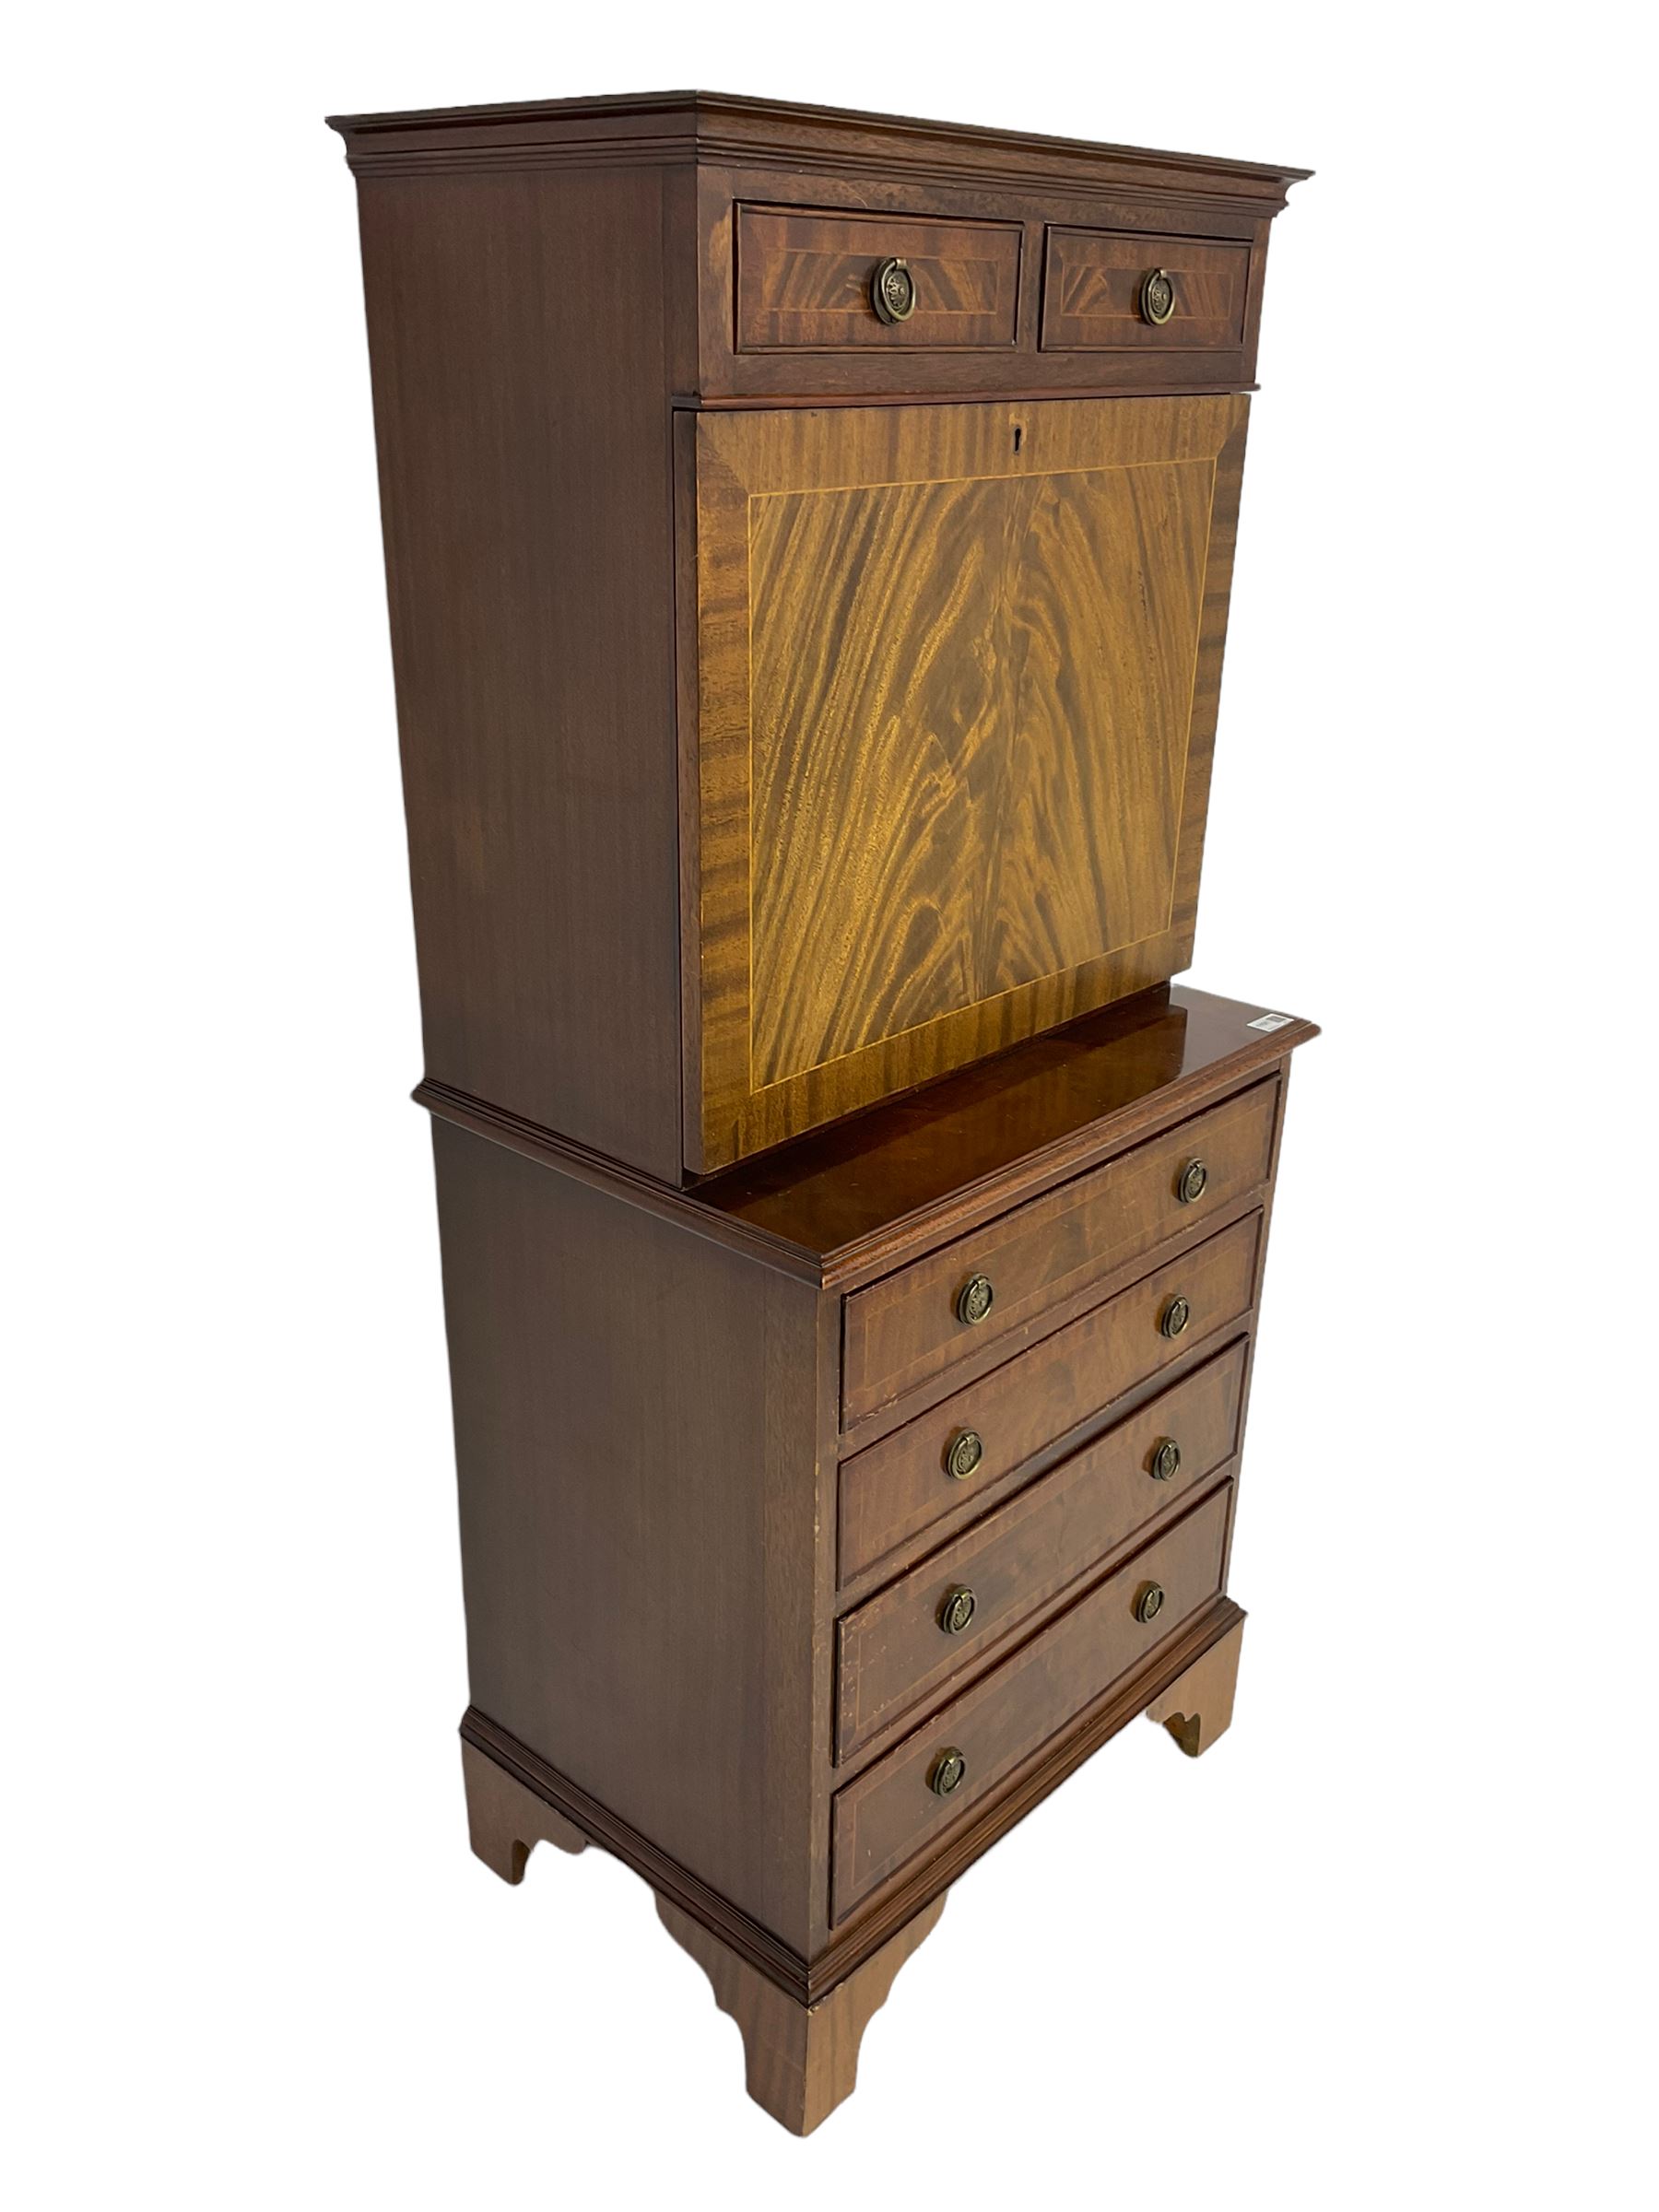 Shaw of London - mahogany secretaire chest - Image 2 of 8